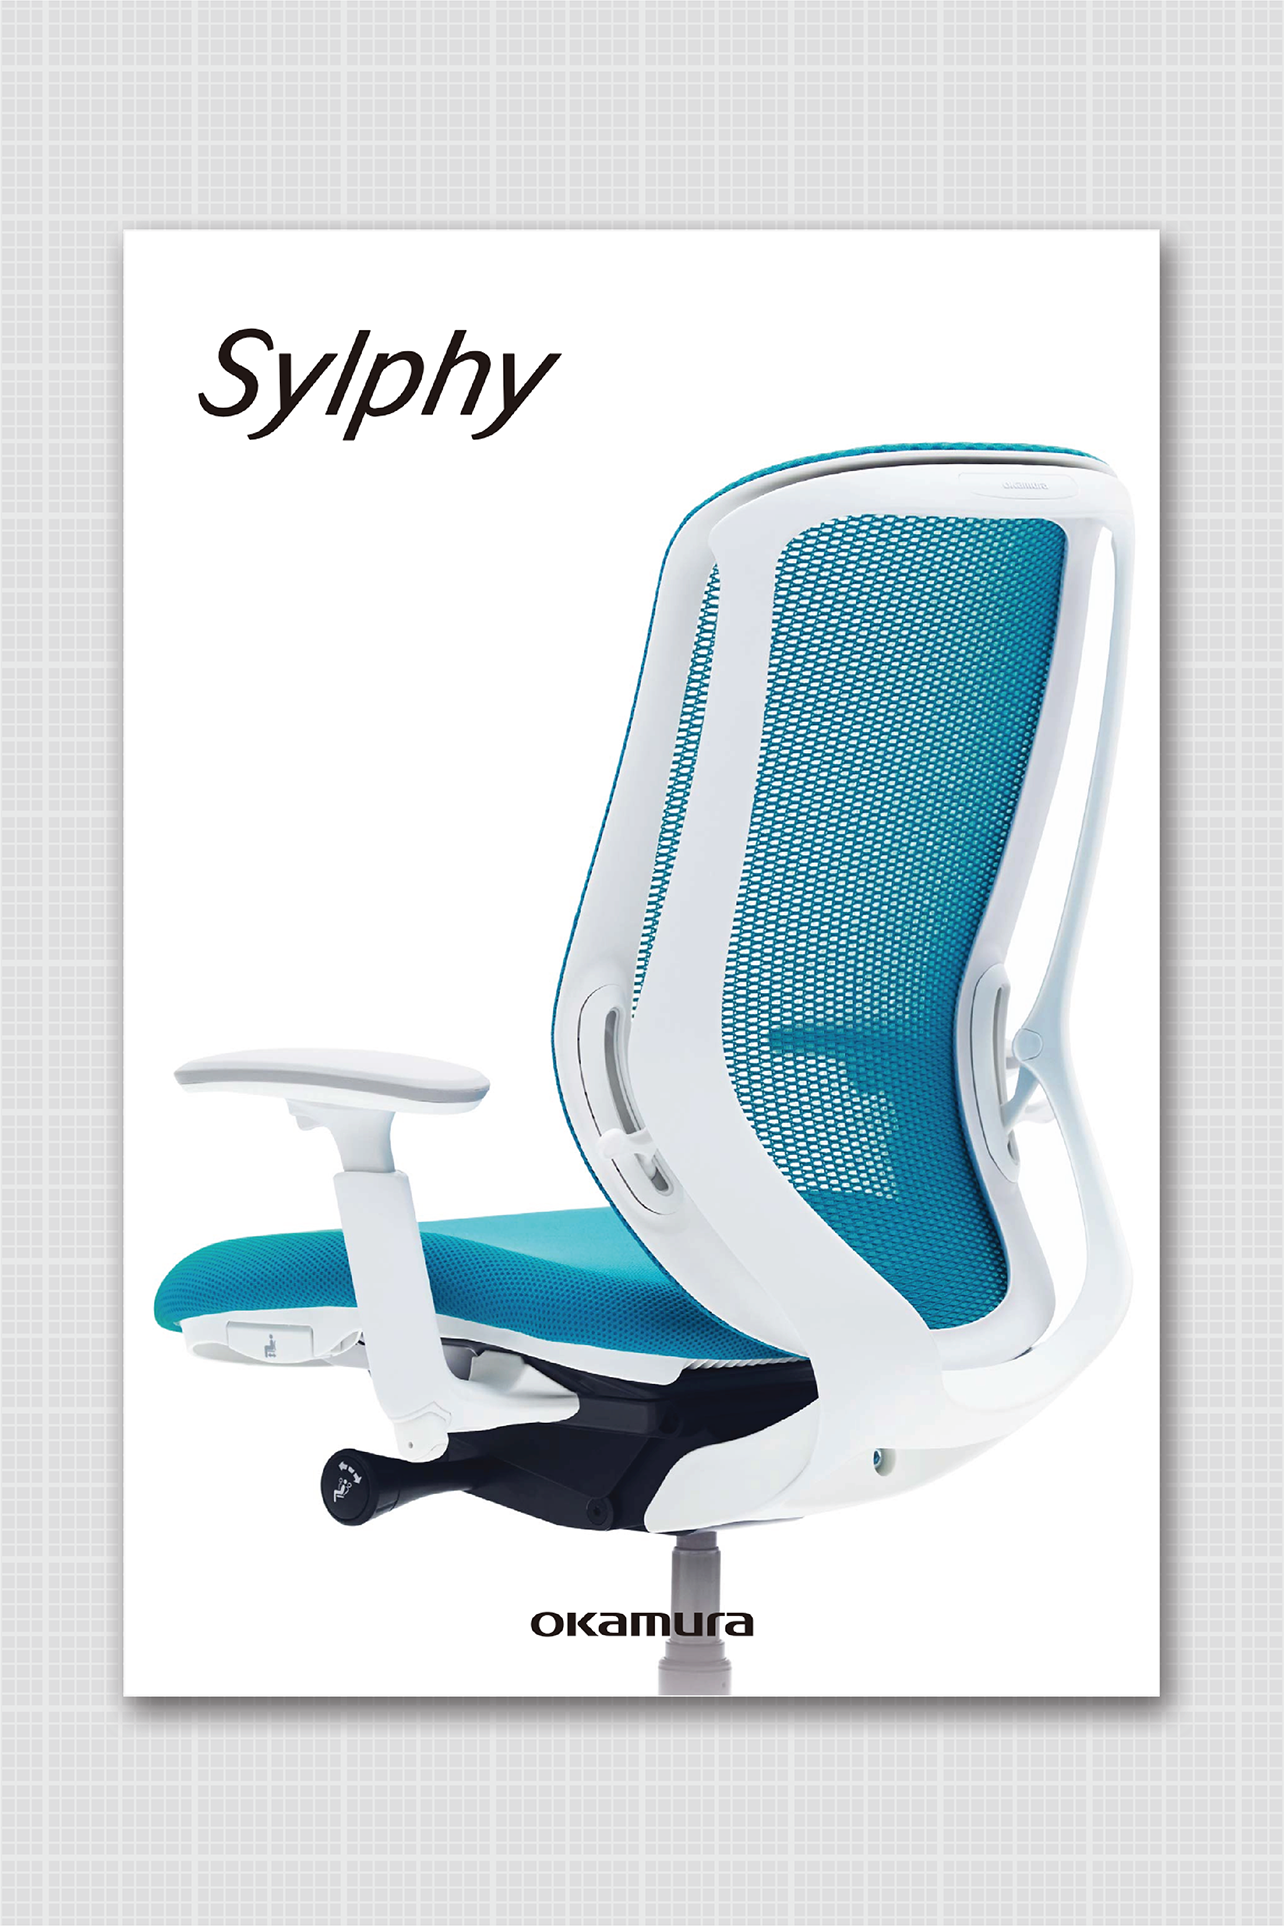 Sylphy Brochure